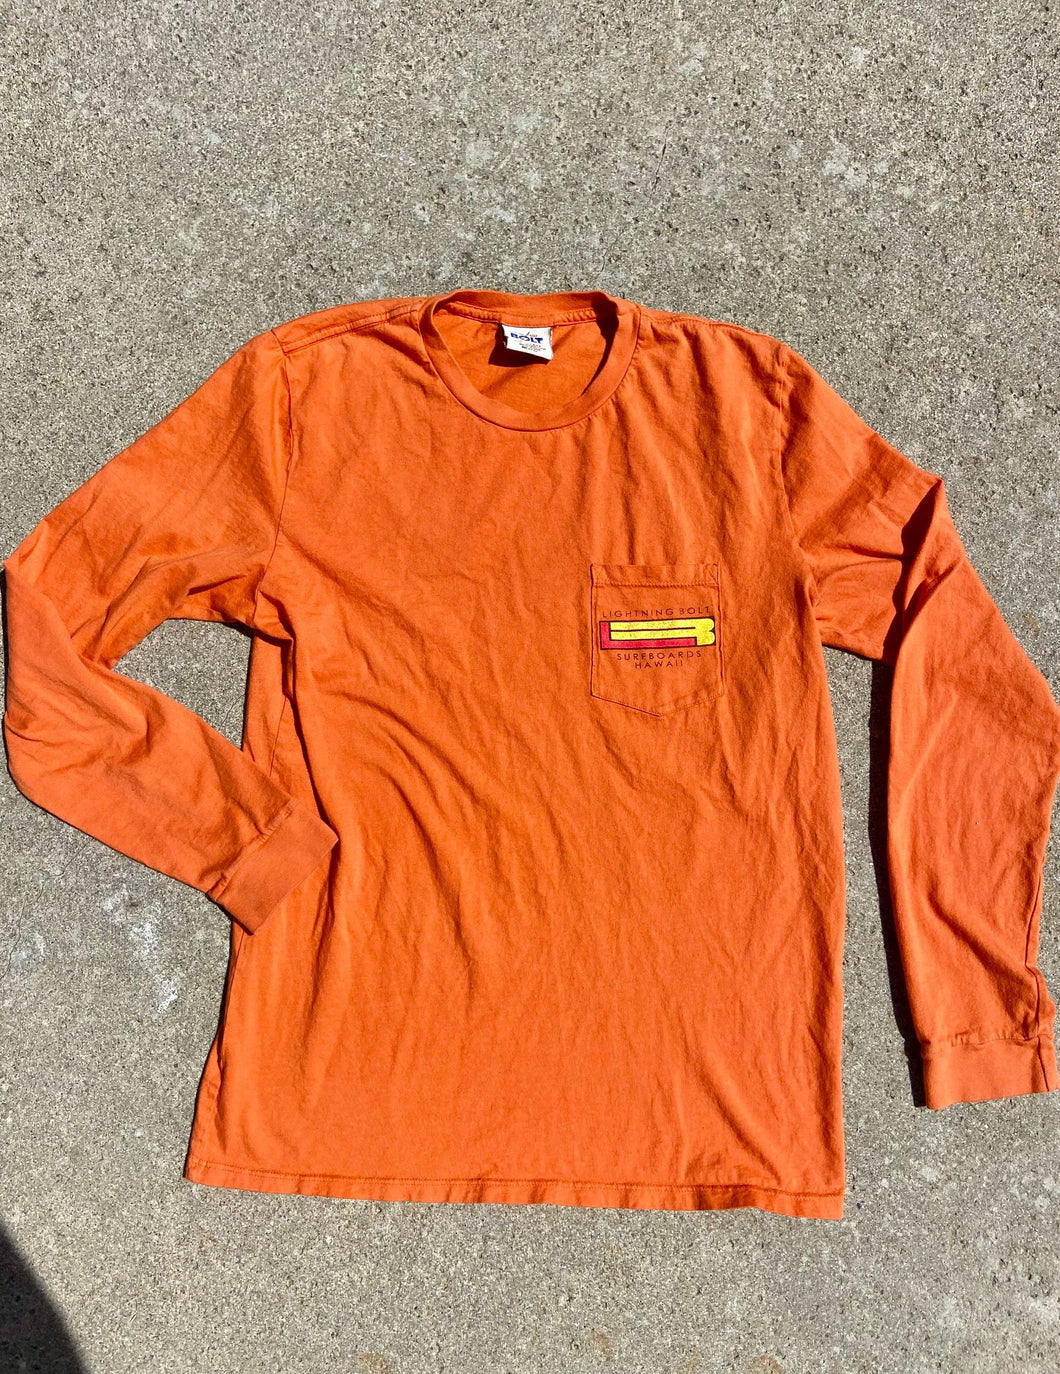 Vintage Orange Lightning Bolt Longsleeve shirt 